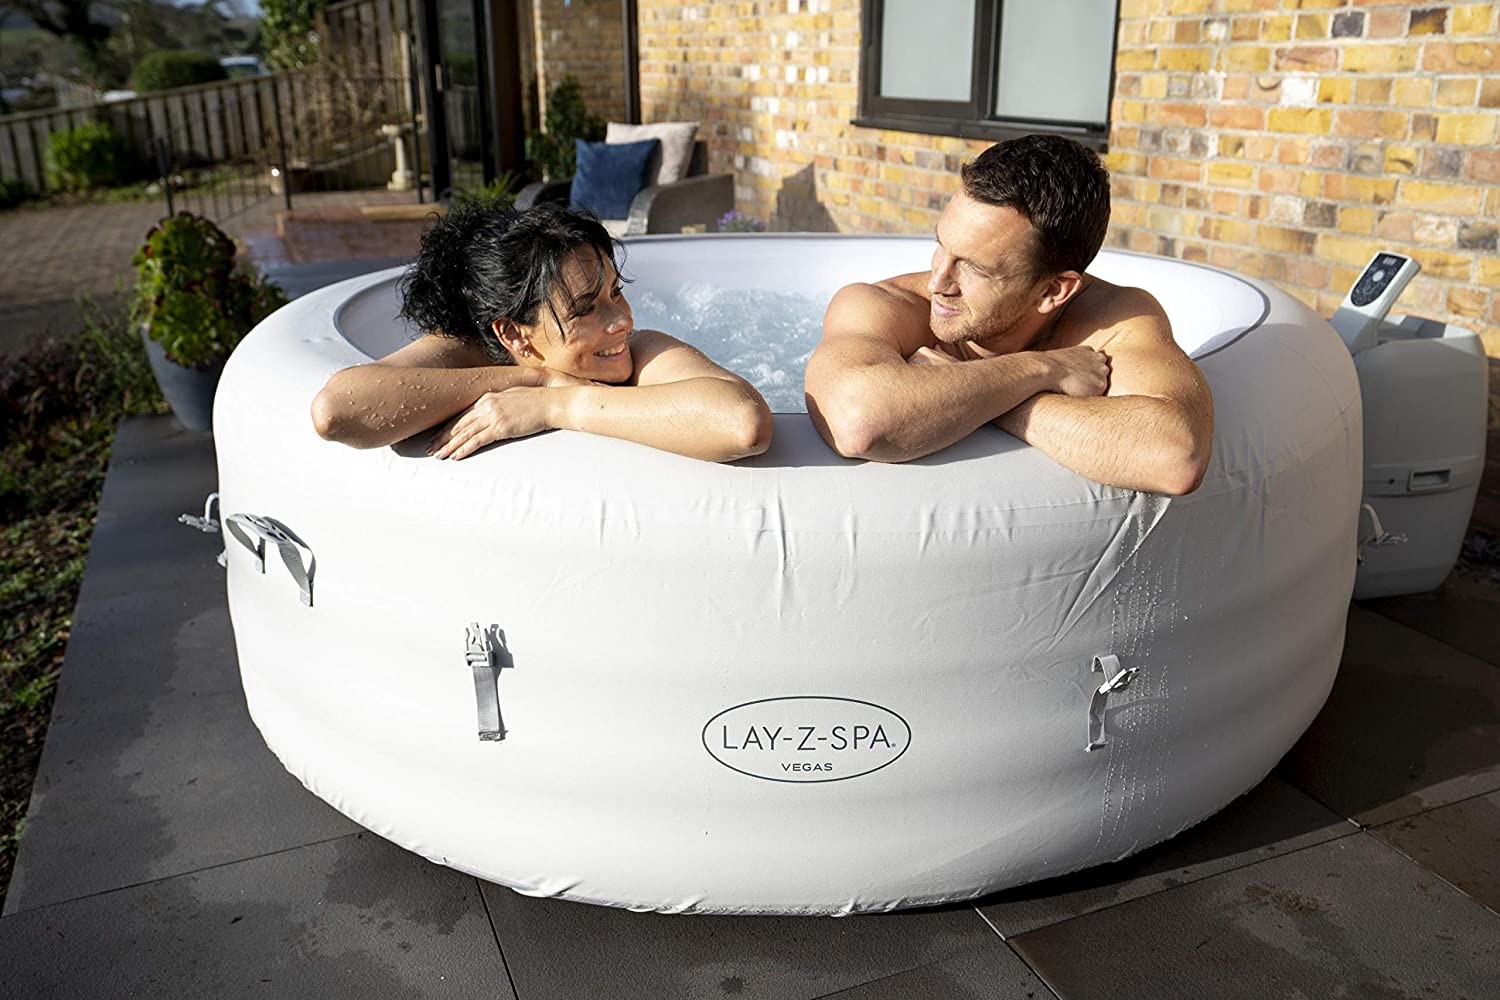 Lay-Z-Spa 60011 Vegas Hot Tub